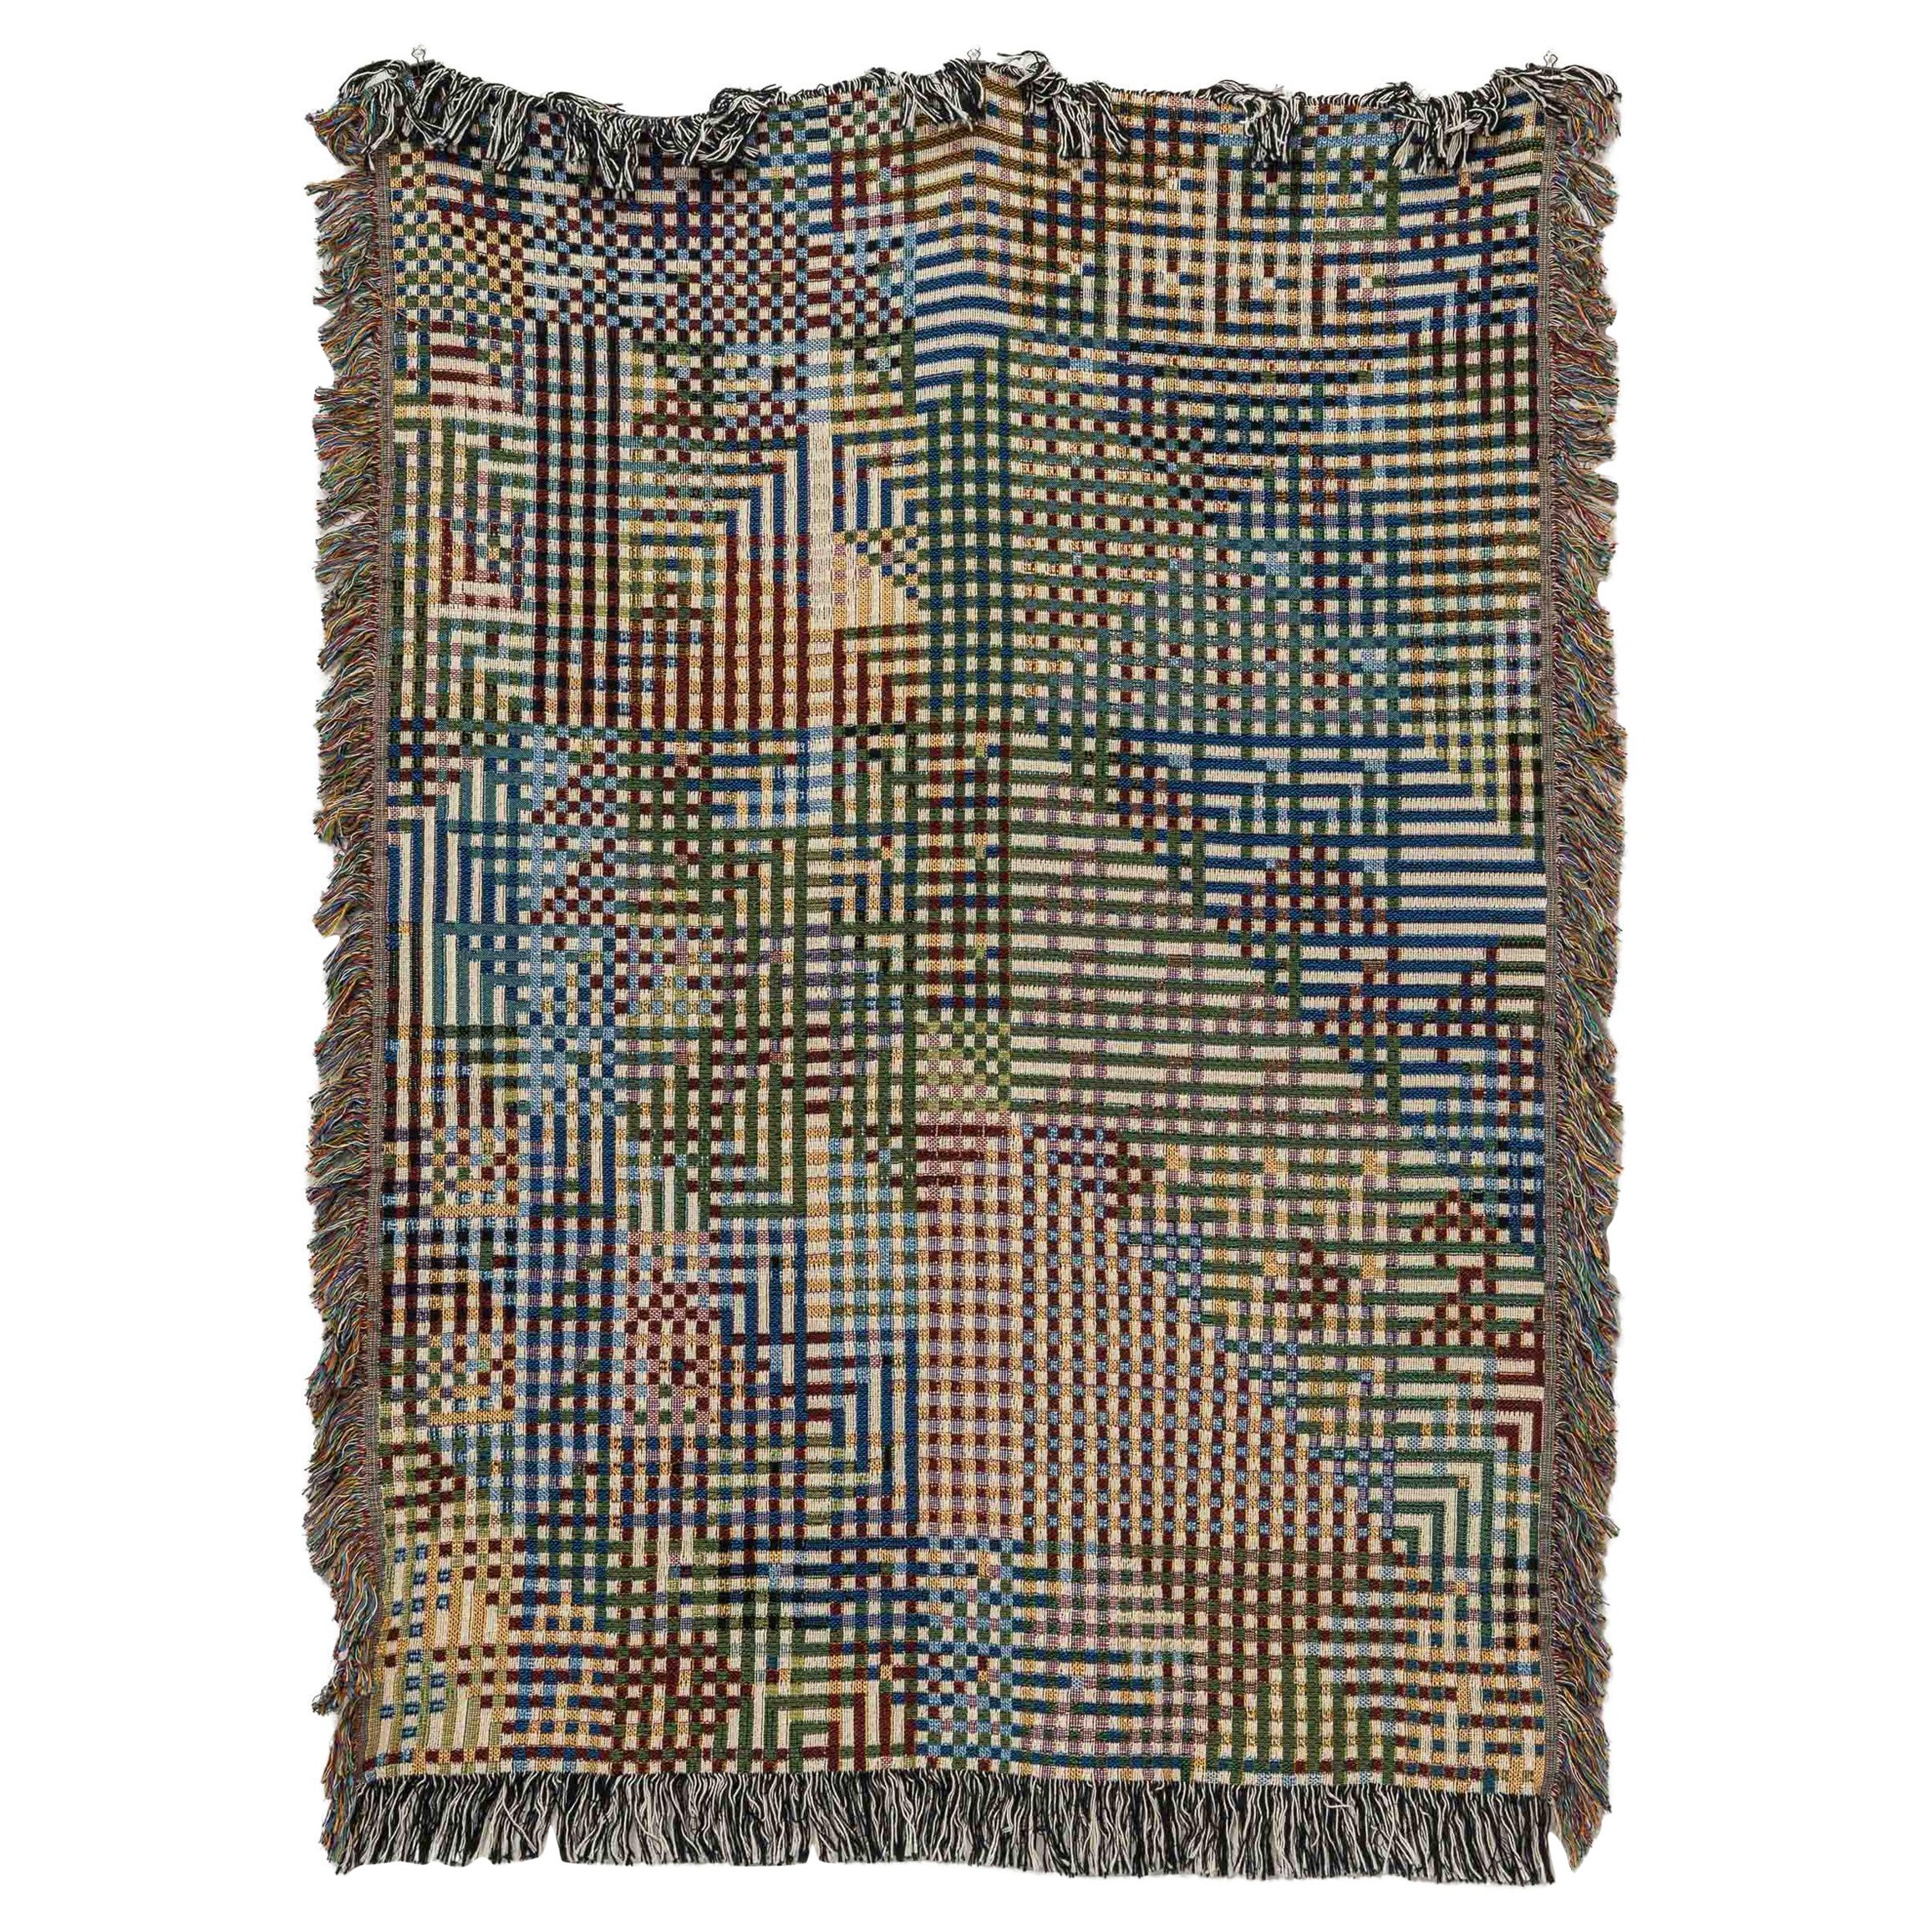 Bit Map Throw Blanket 03, 100% Cotton Woven Contemporary Pixel Art, 60 "x80" (en anglais)